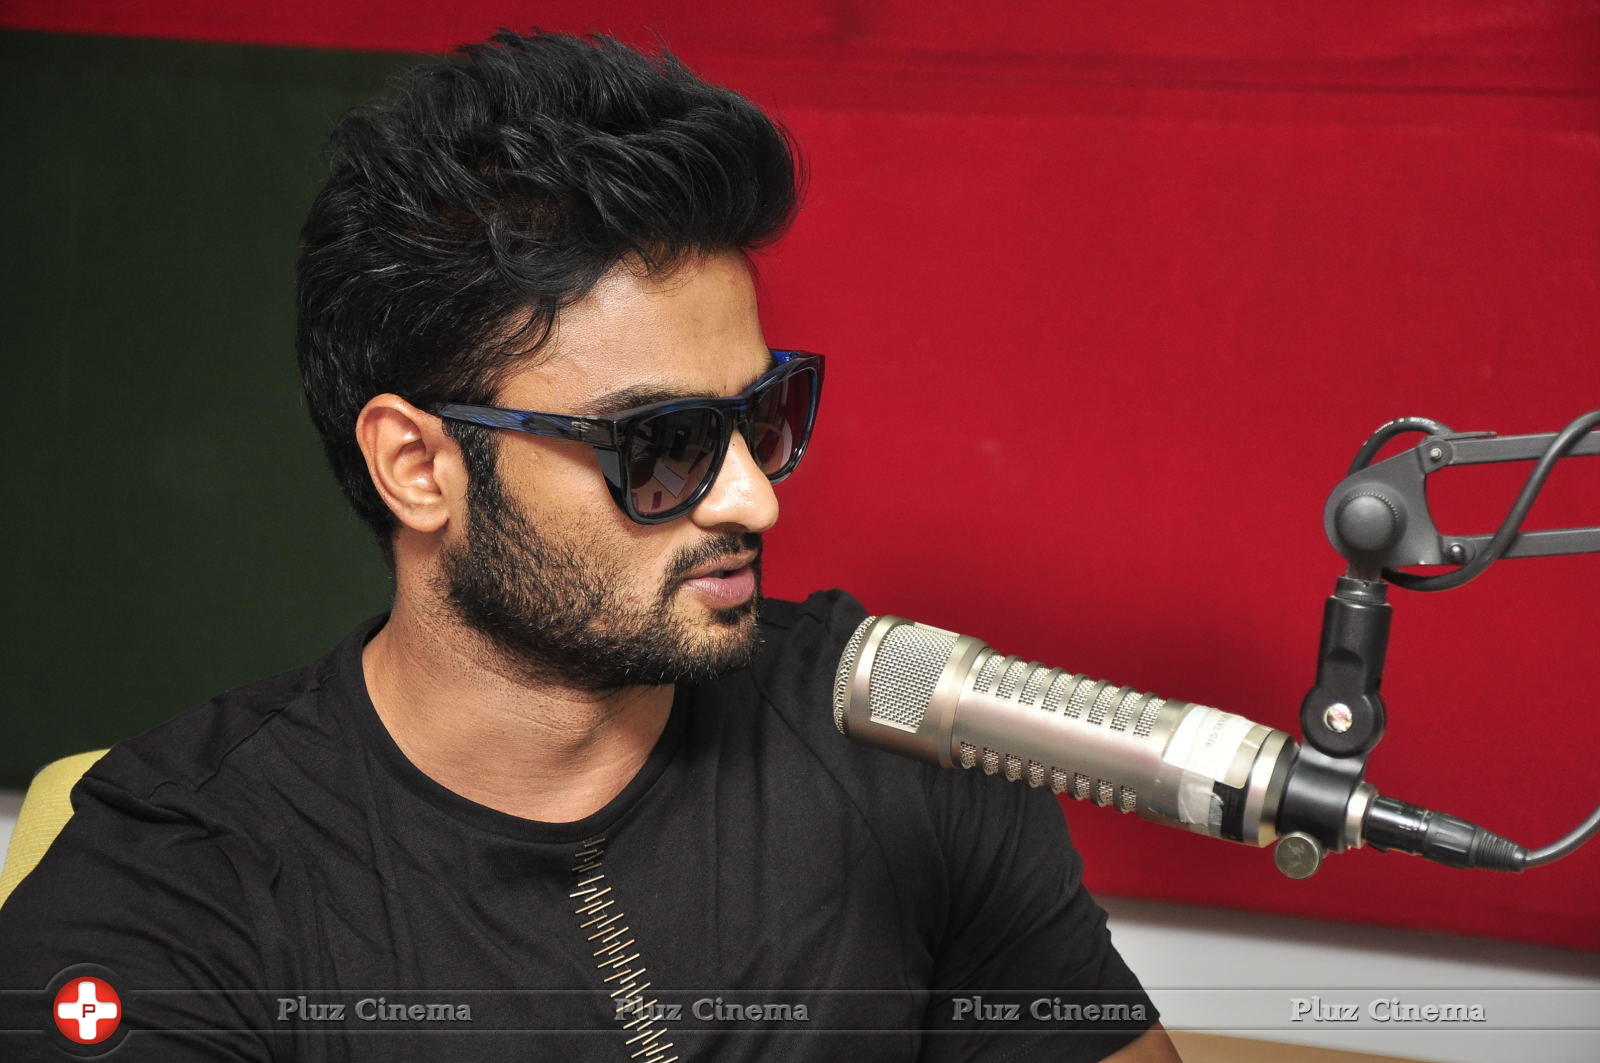 Sudheer Babu - Bhale Manchi Roju Movie Song Launch at Radio Mirchi Stills | Picture 1166449